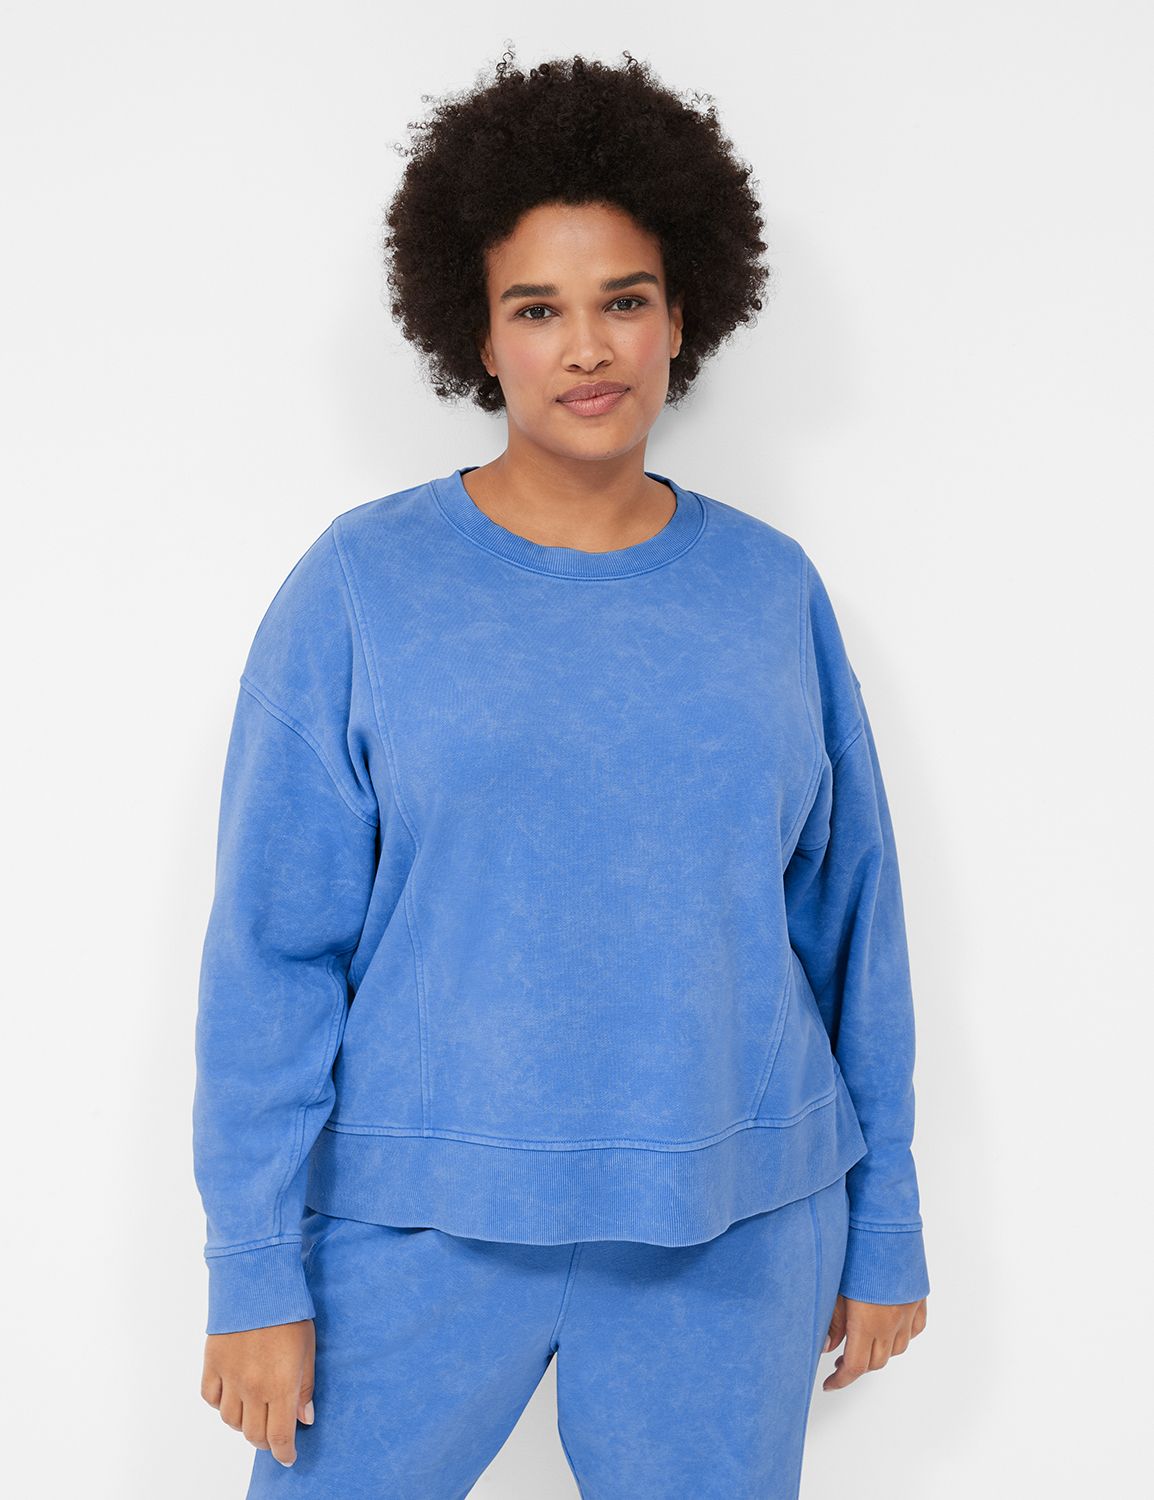 Plus Size Women's Hoodies & Sweatshirts